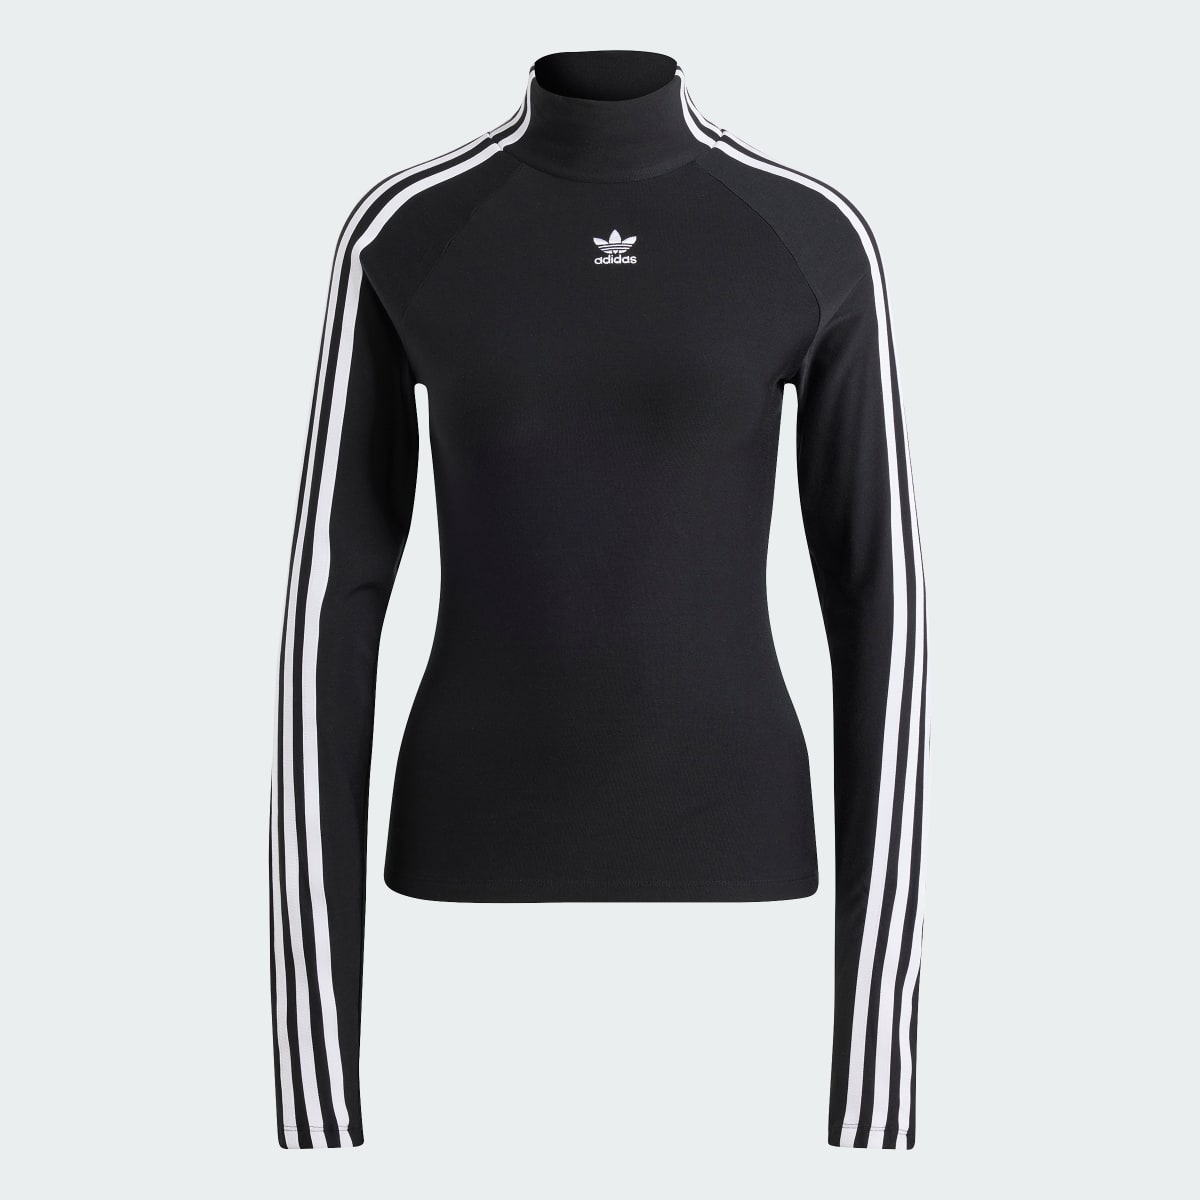 Adidas Koszulka Adilenium Tight Long Sleeve. 5